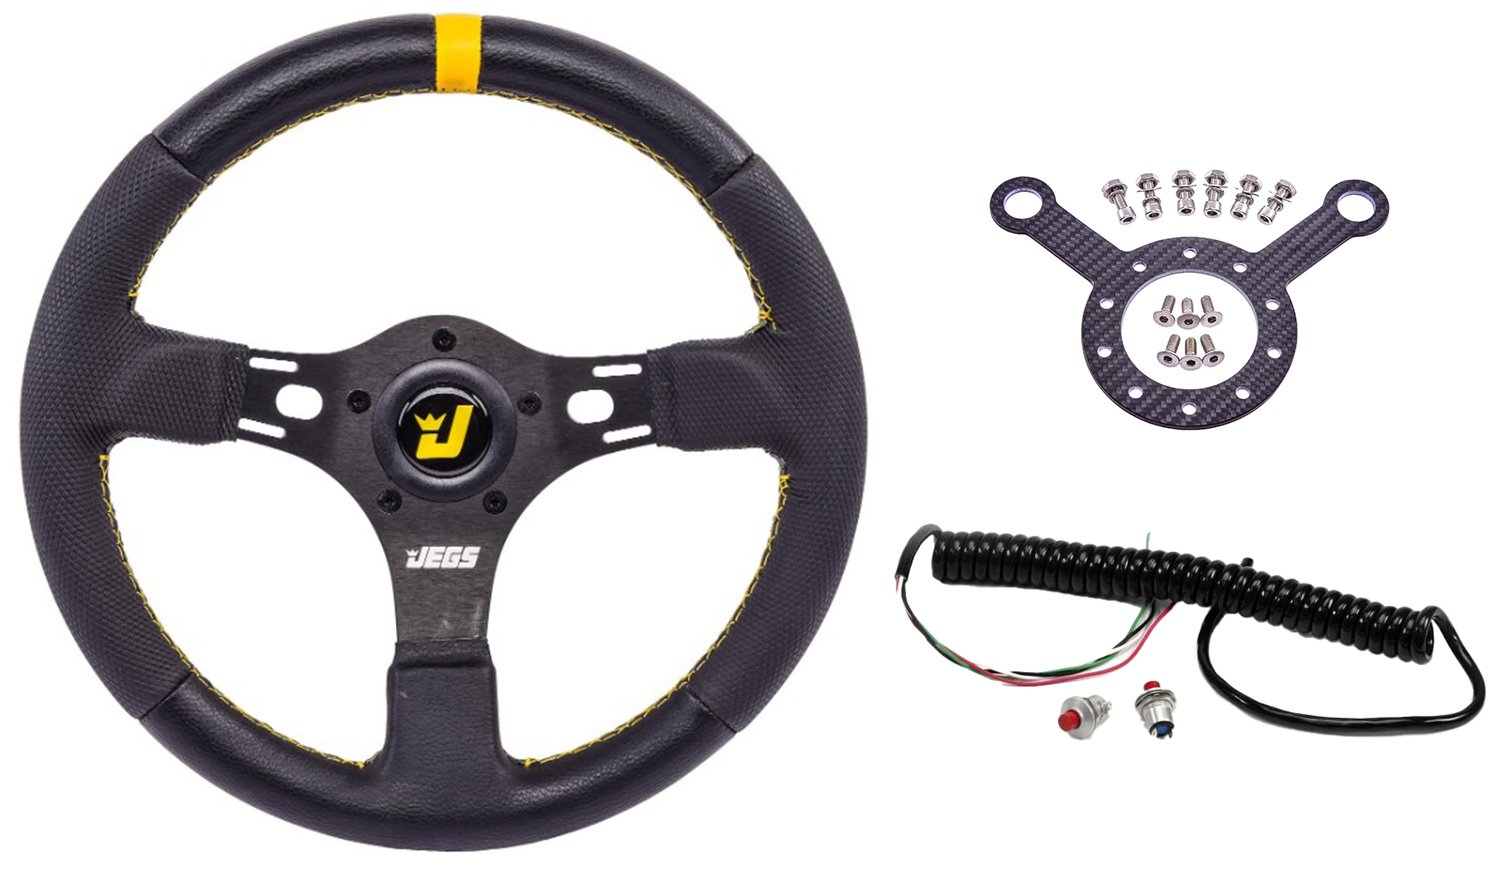 2-Button Switch / Steering Wheel Kit